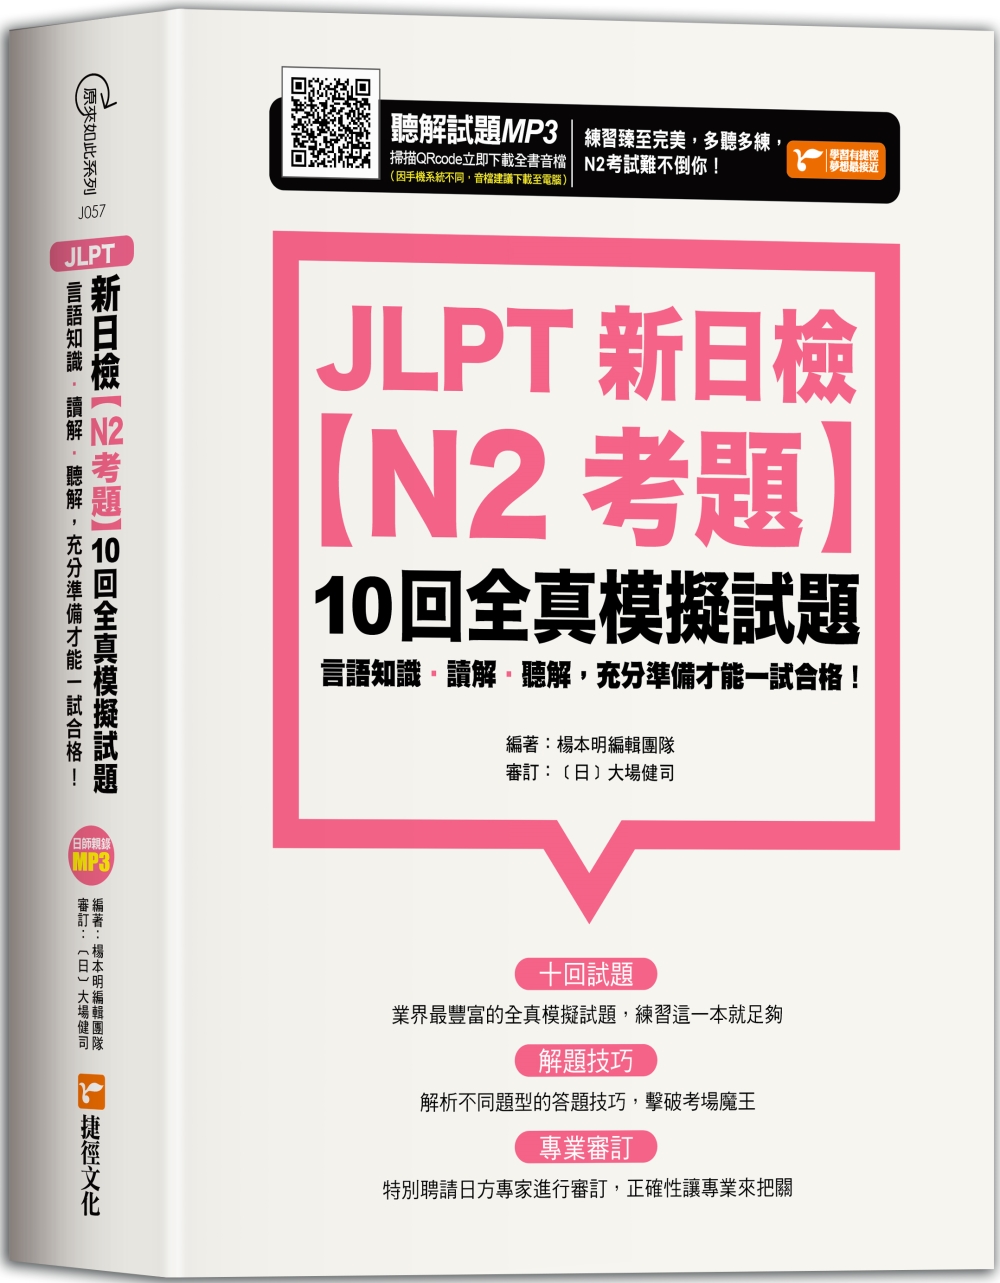 JLPT新日檢【N2考題】10...